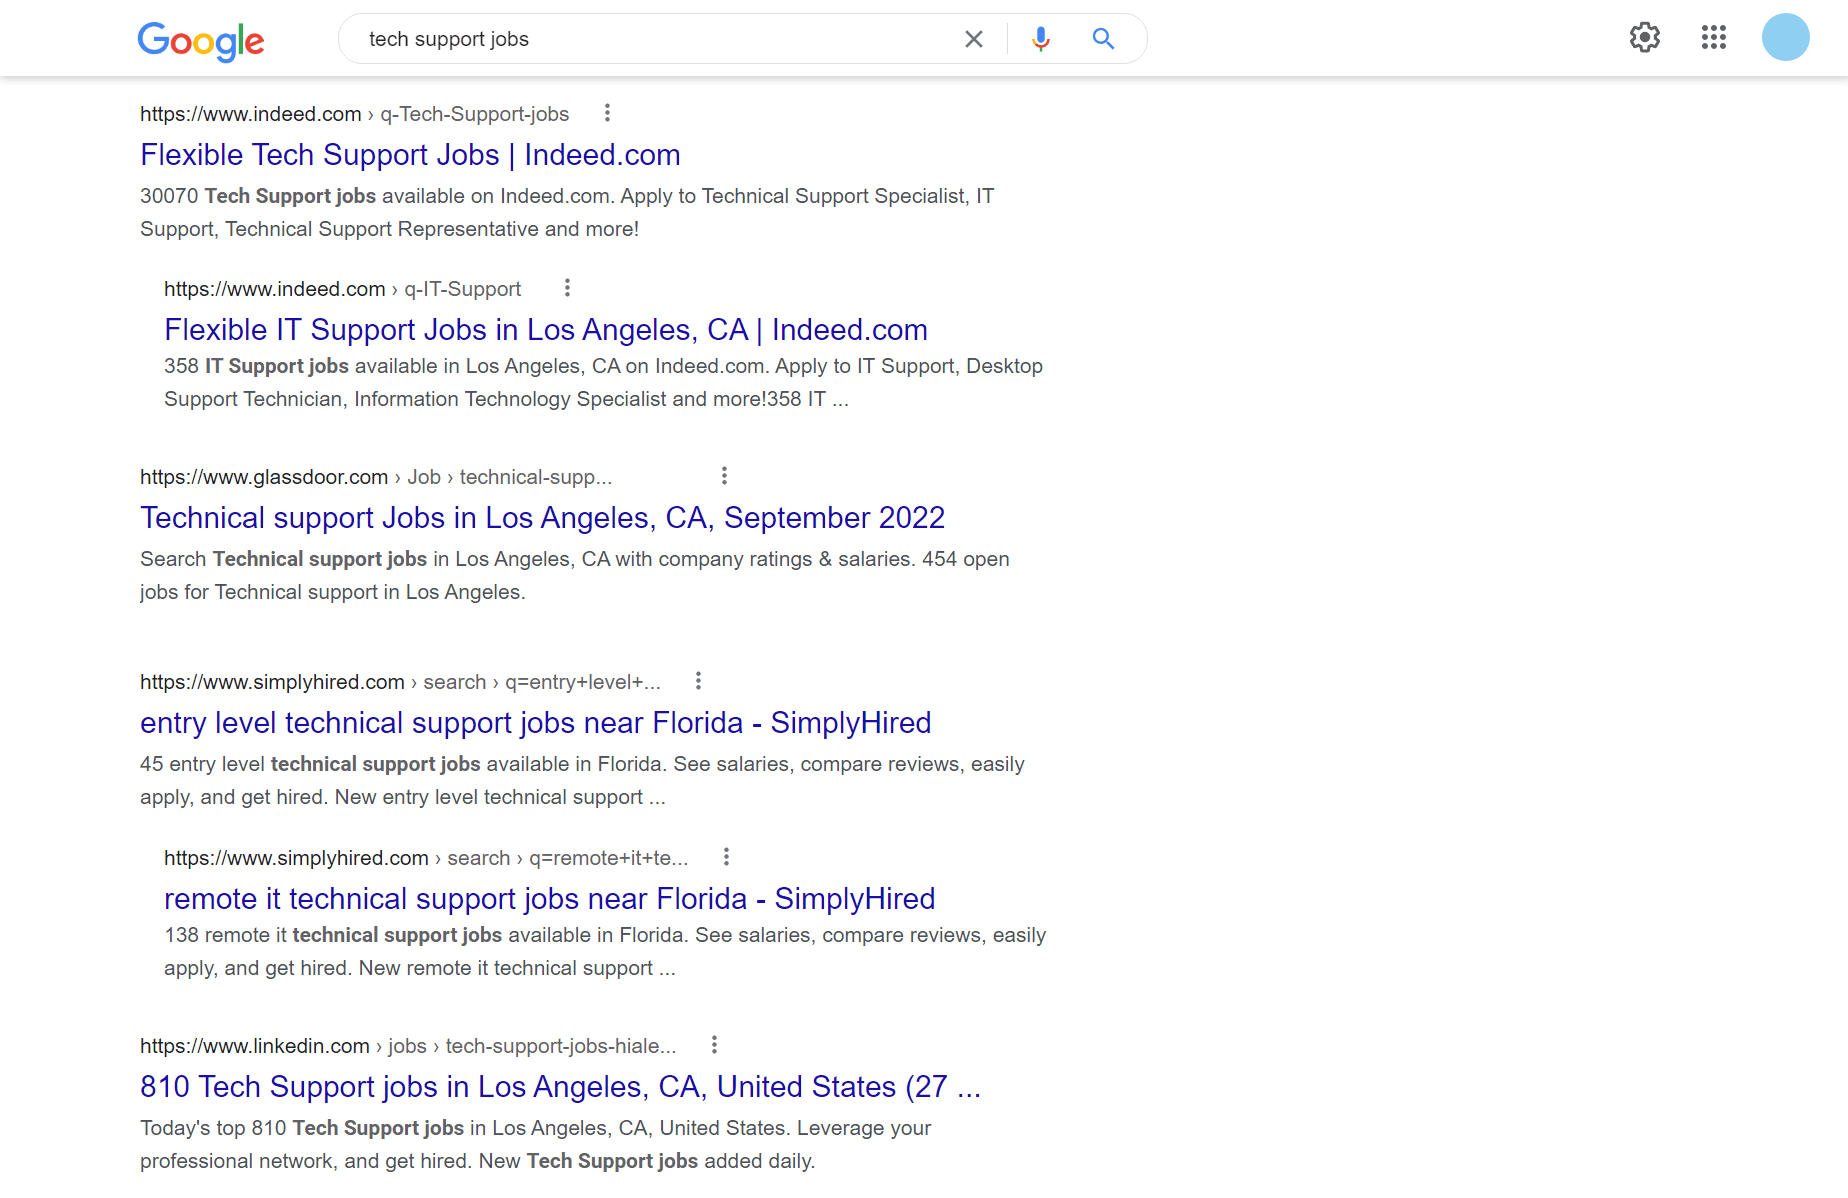 tech-support-jobs-Google-search